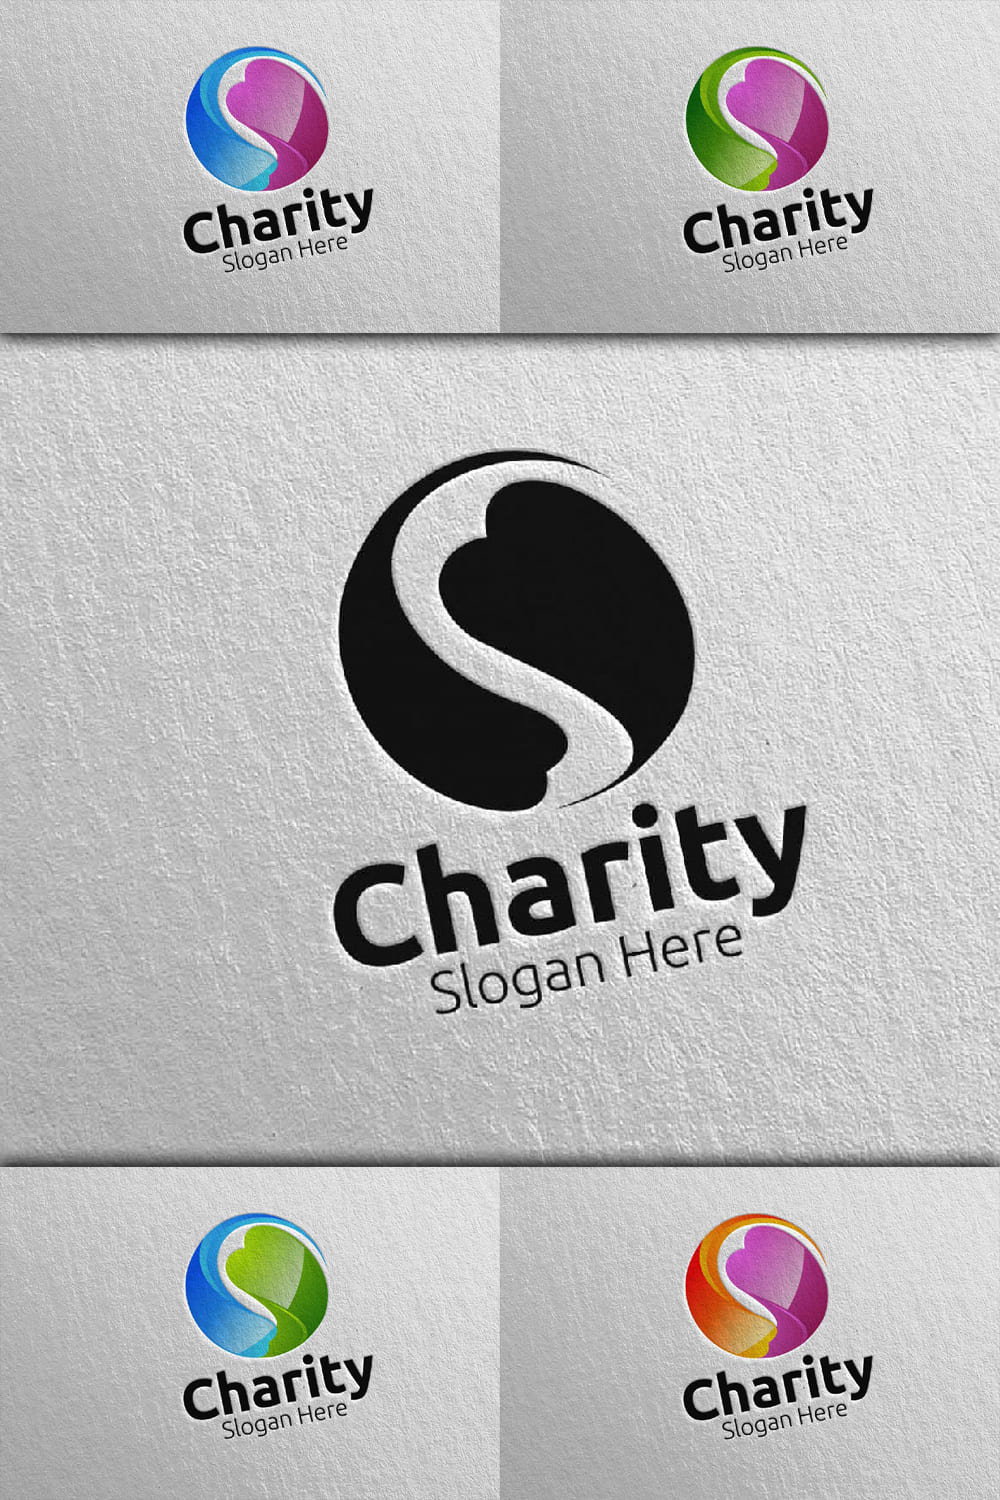 3D Charity Hand Love Logo Design 86 - Pinterest.